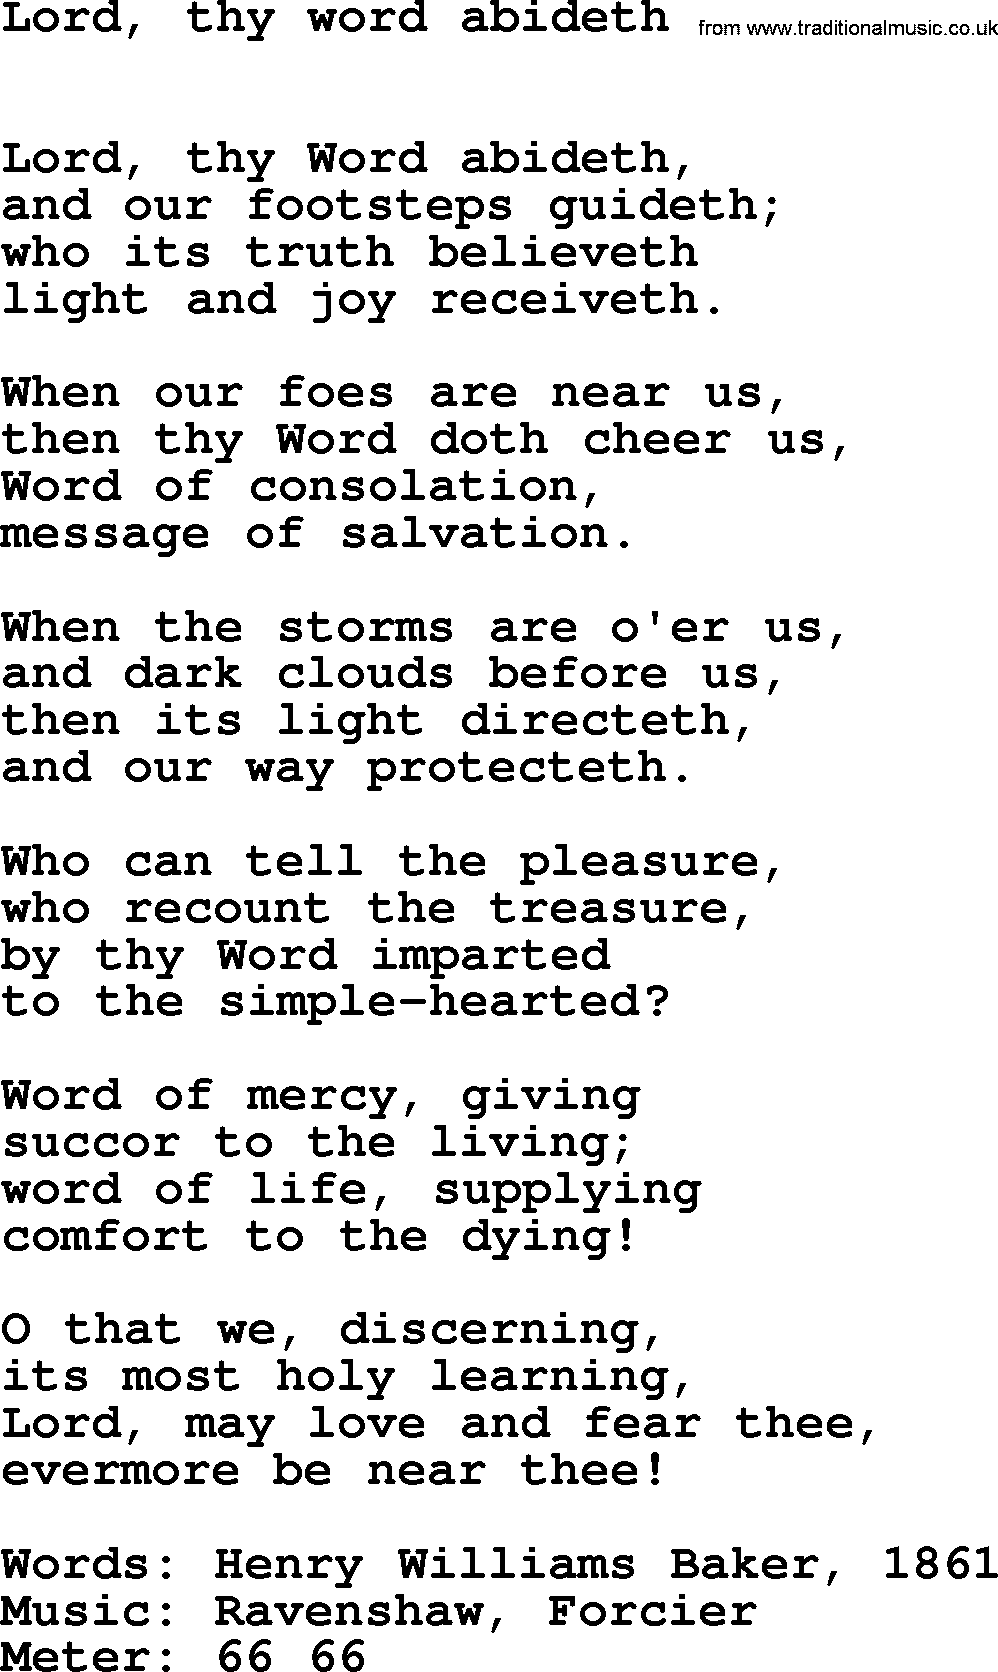 Book of Common Praise Hymn: Lord, Thy Word Abideth.txt lyrics with midi music